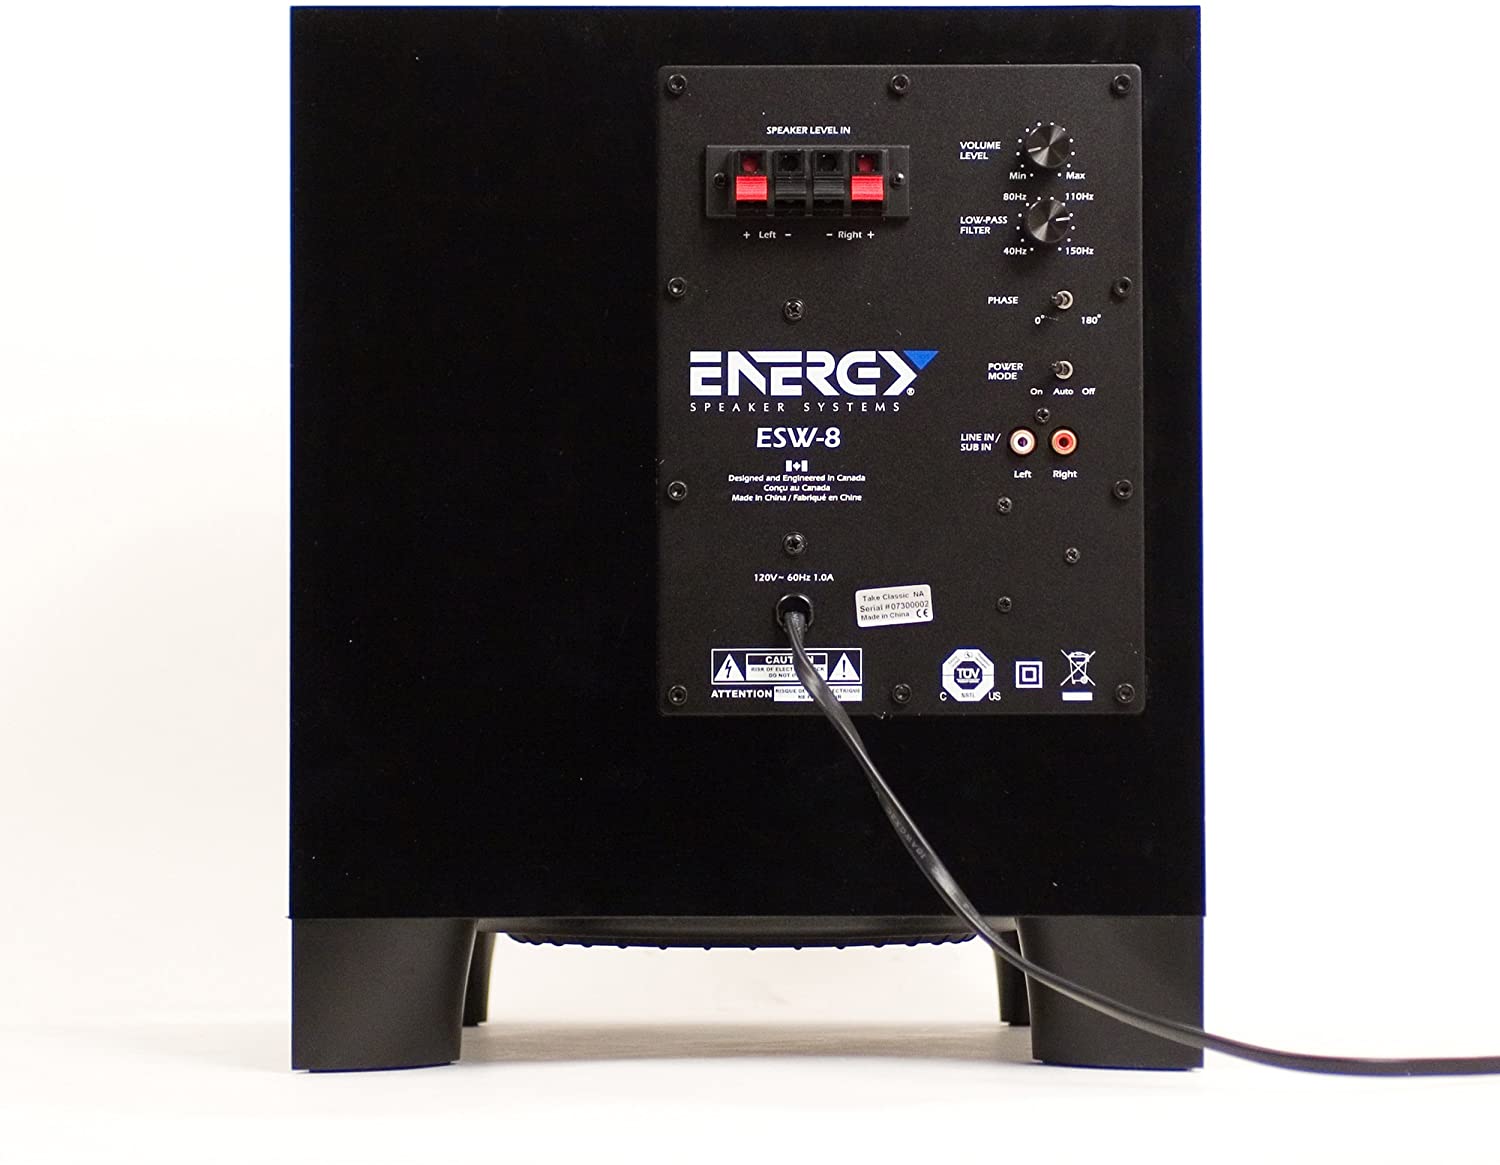 Energy ENERGYT5.1 Energy 5.1 Take Classic Home Theater System, Gloss Black